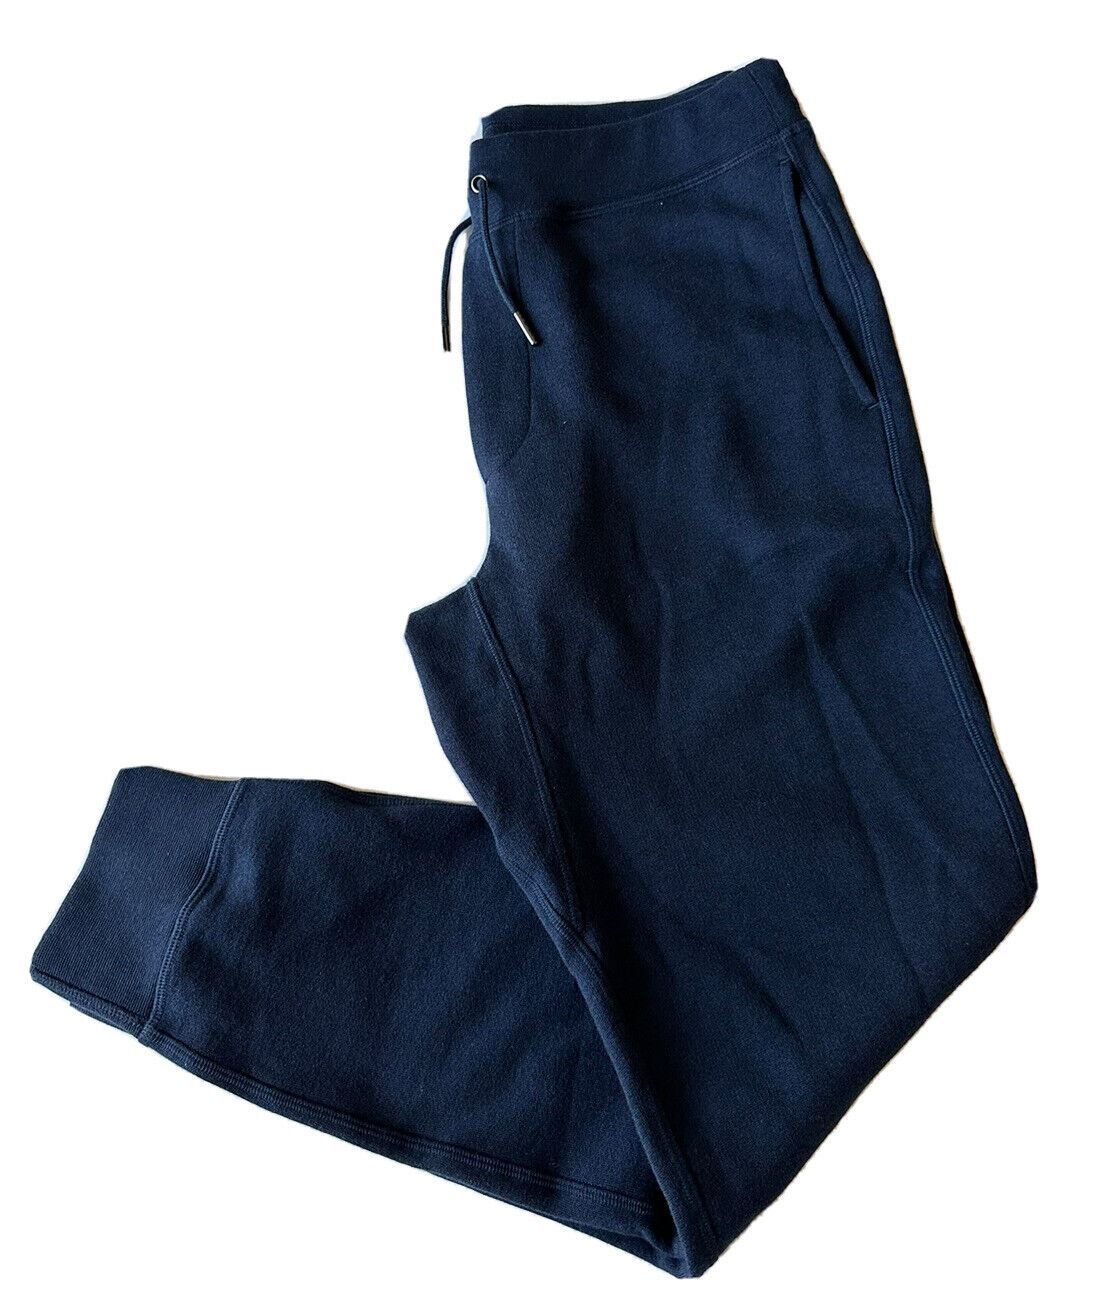 Neu mit Etikett: 395 $ Ralph Lauren Purple Label Casual Blue Pants Large (34" gemessen) 